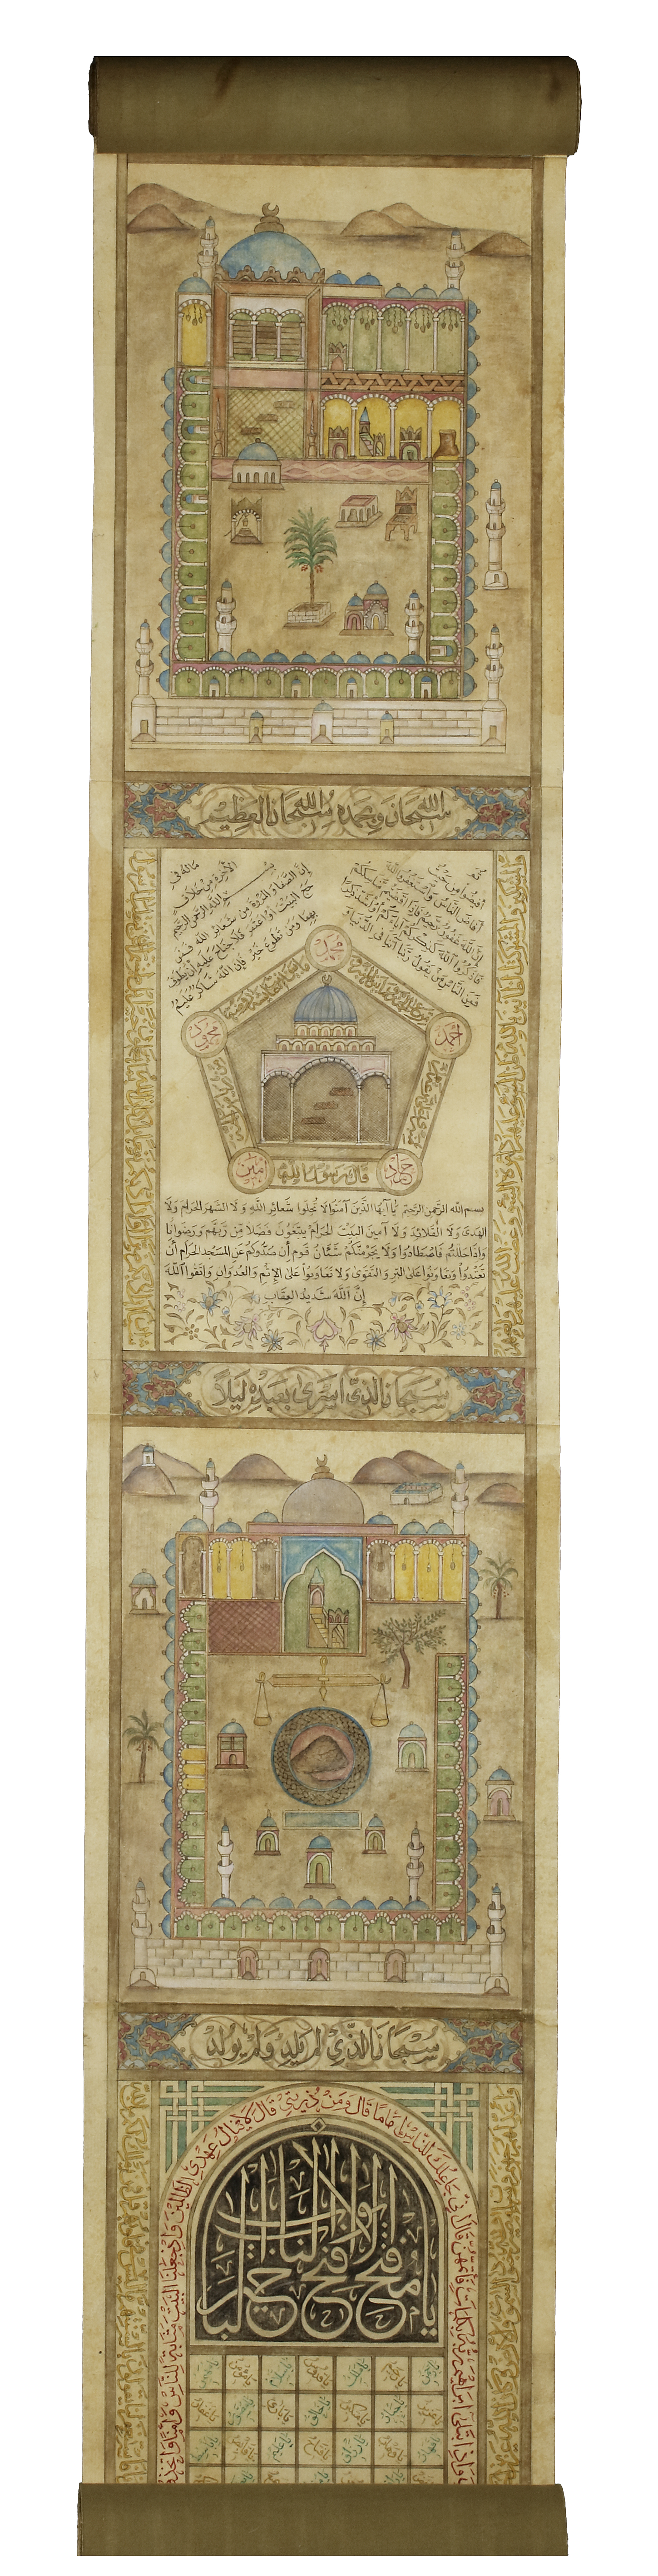 AN OTTOMAN ILLUMINATED HAJJ SCROLL, WRITTEN BY ISMAEL AHMED IN MECCA, DATED DHU HIJJA 1231 AH/1816 A - Image 10 of 12